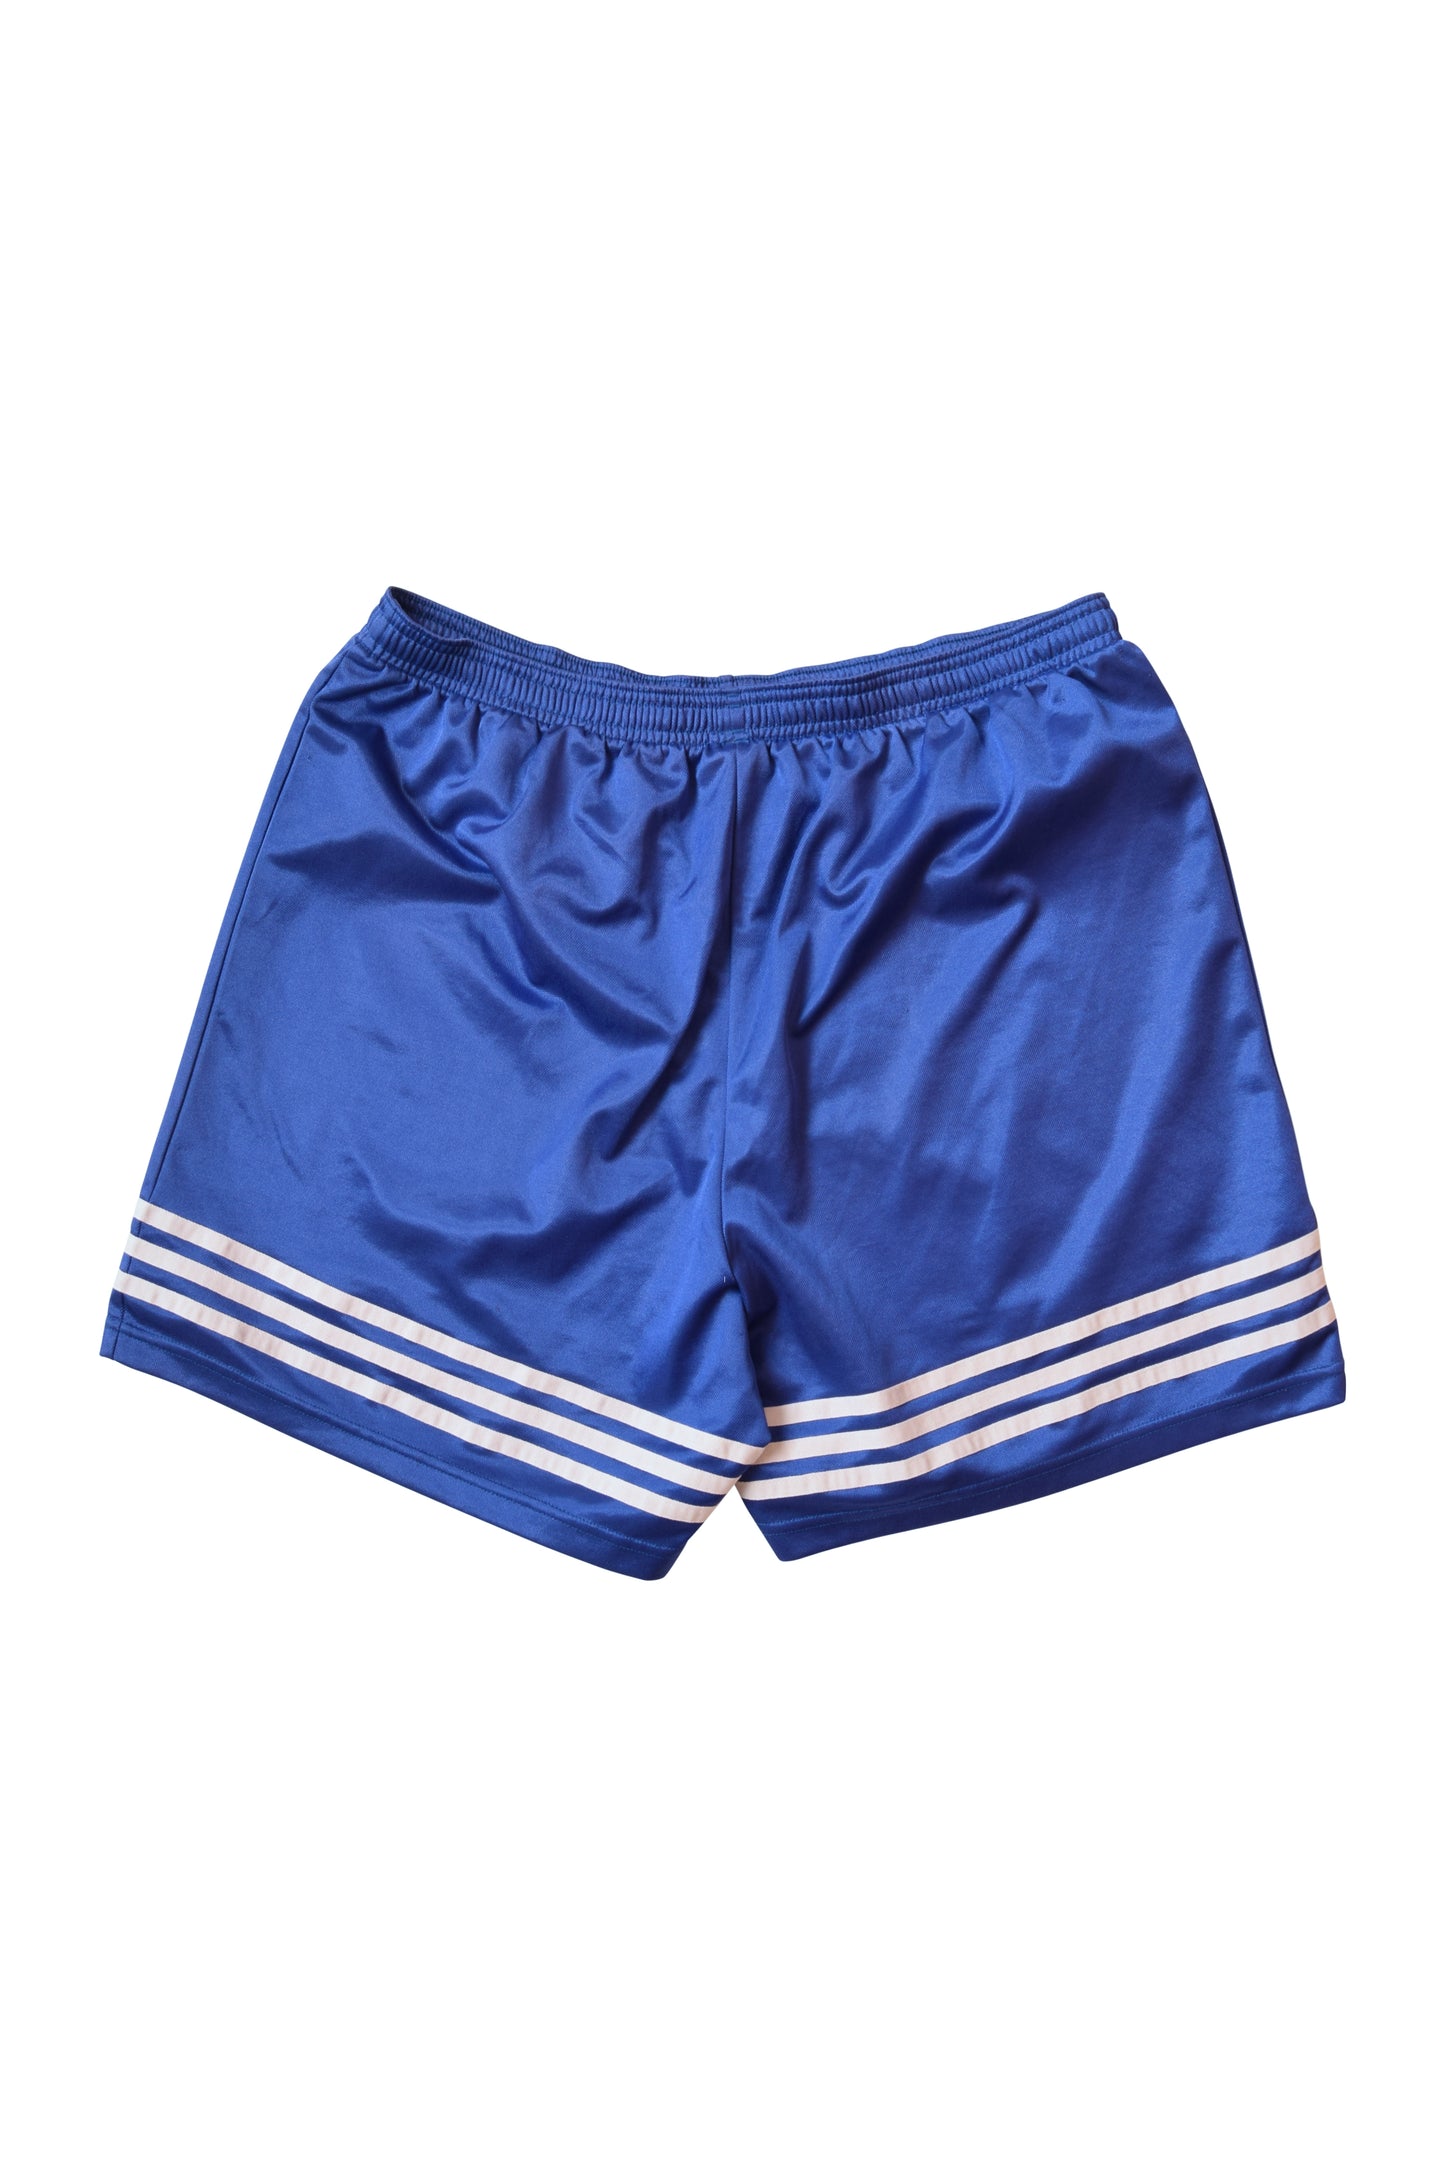 Vintage Adidas Bayern Munchen Shorts Home 1995-1996 Size L